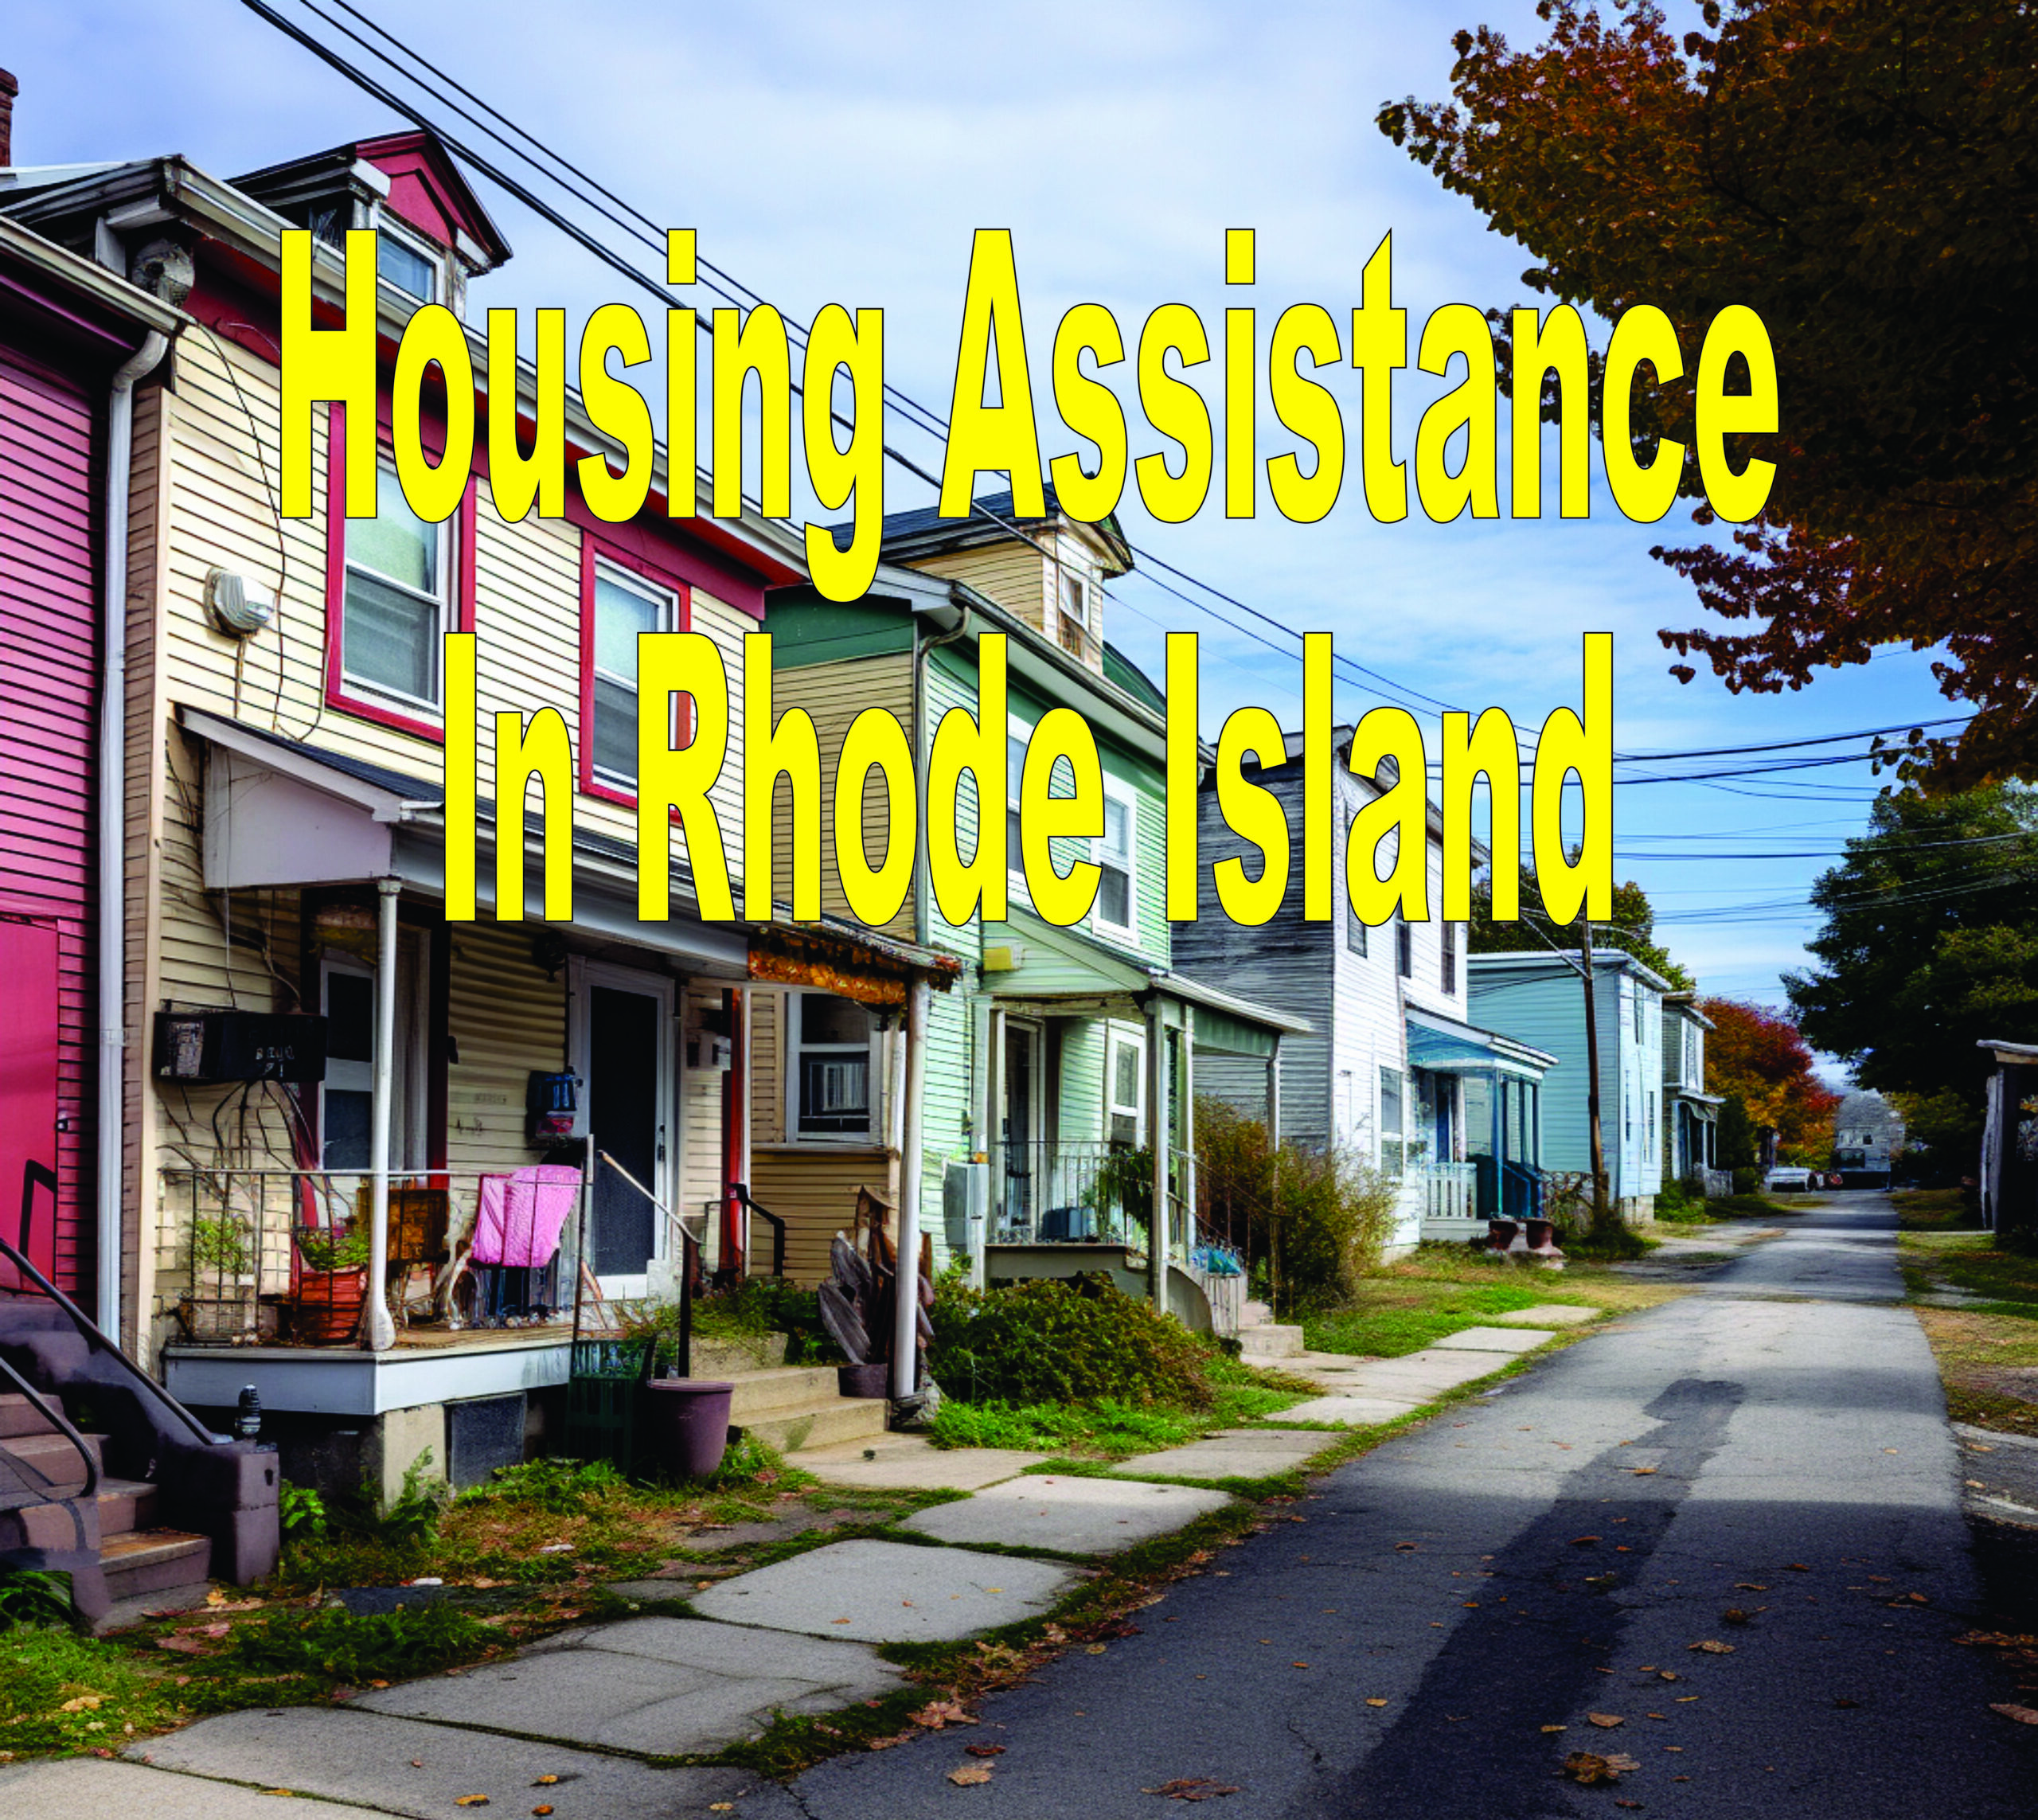 Housing Assistance In Rhode Island